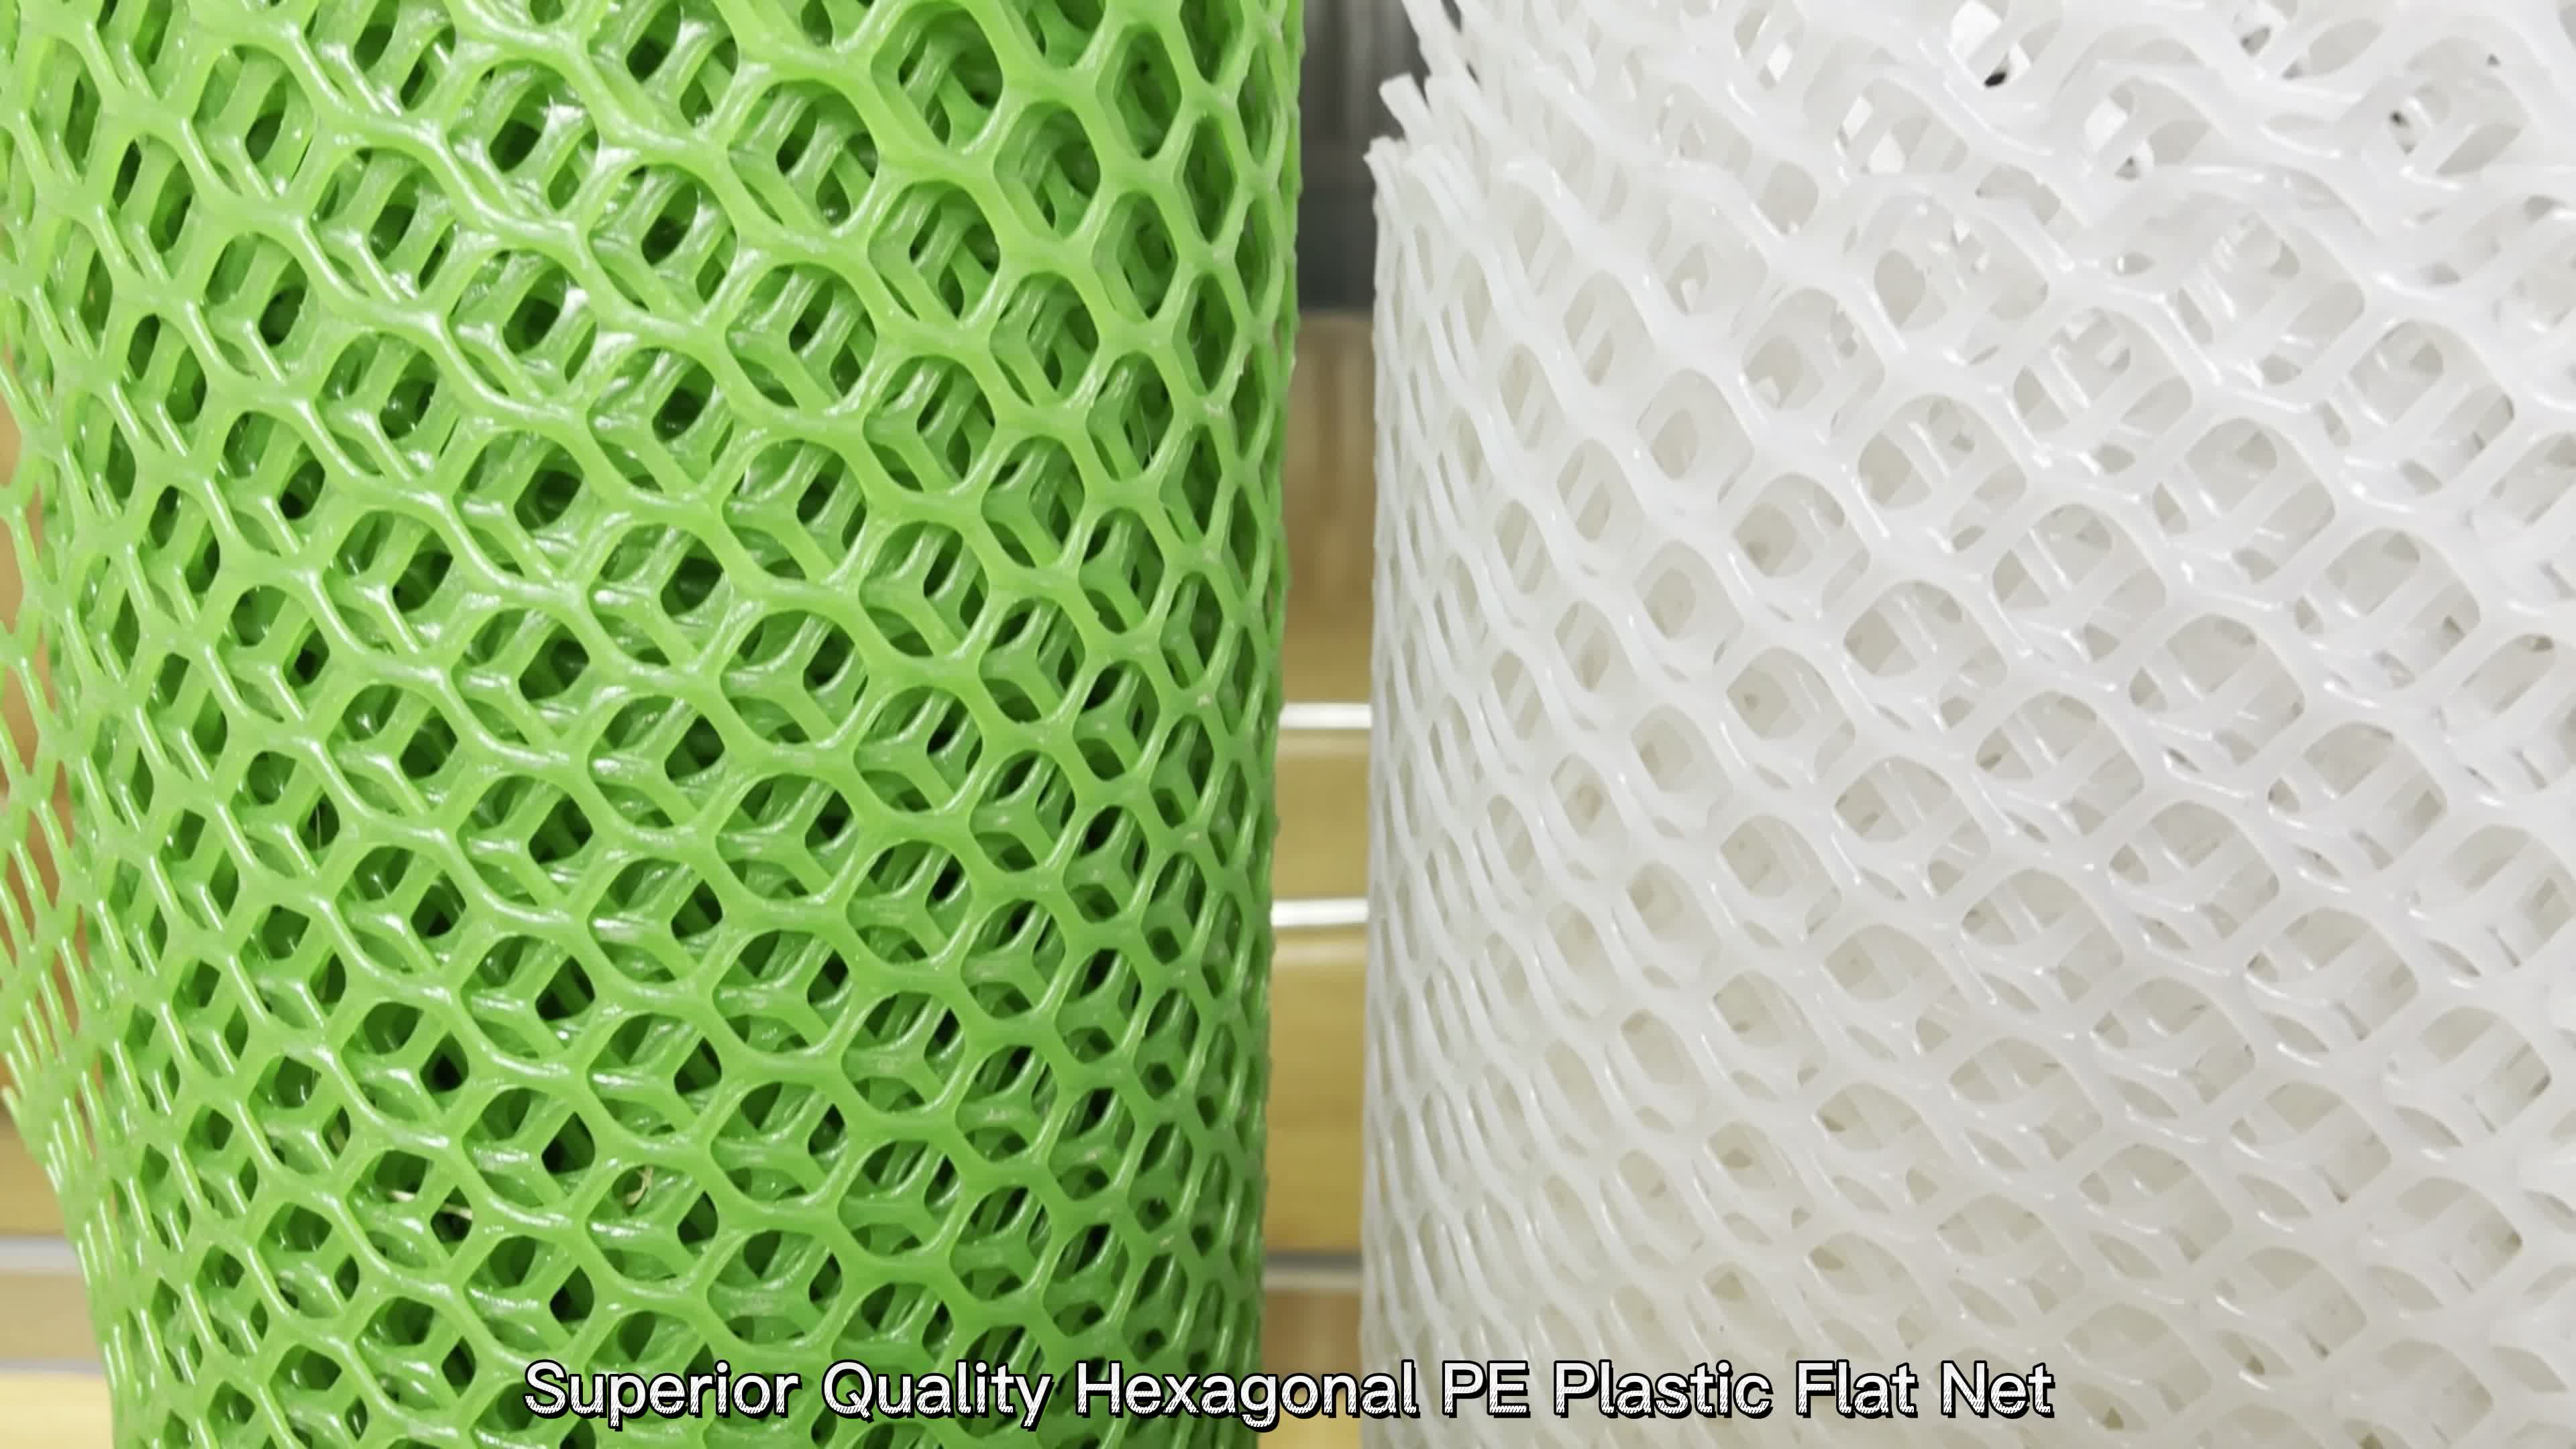 Xinhai Calidad superior Hexagonal PE Plastic Neta plana/Refuerzo de césped Mesh/Protección de hierba Mesh1